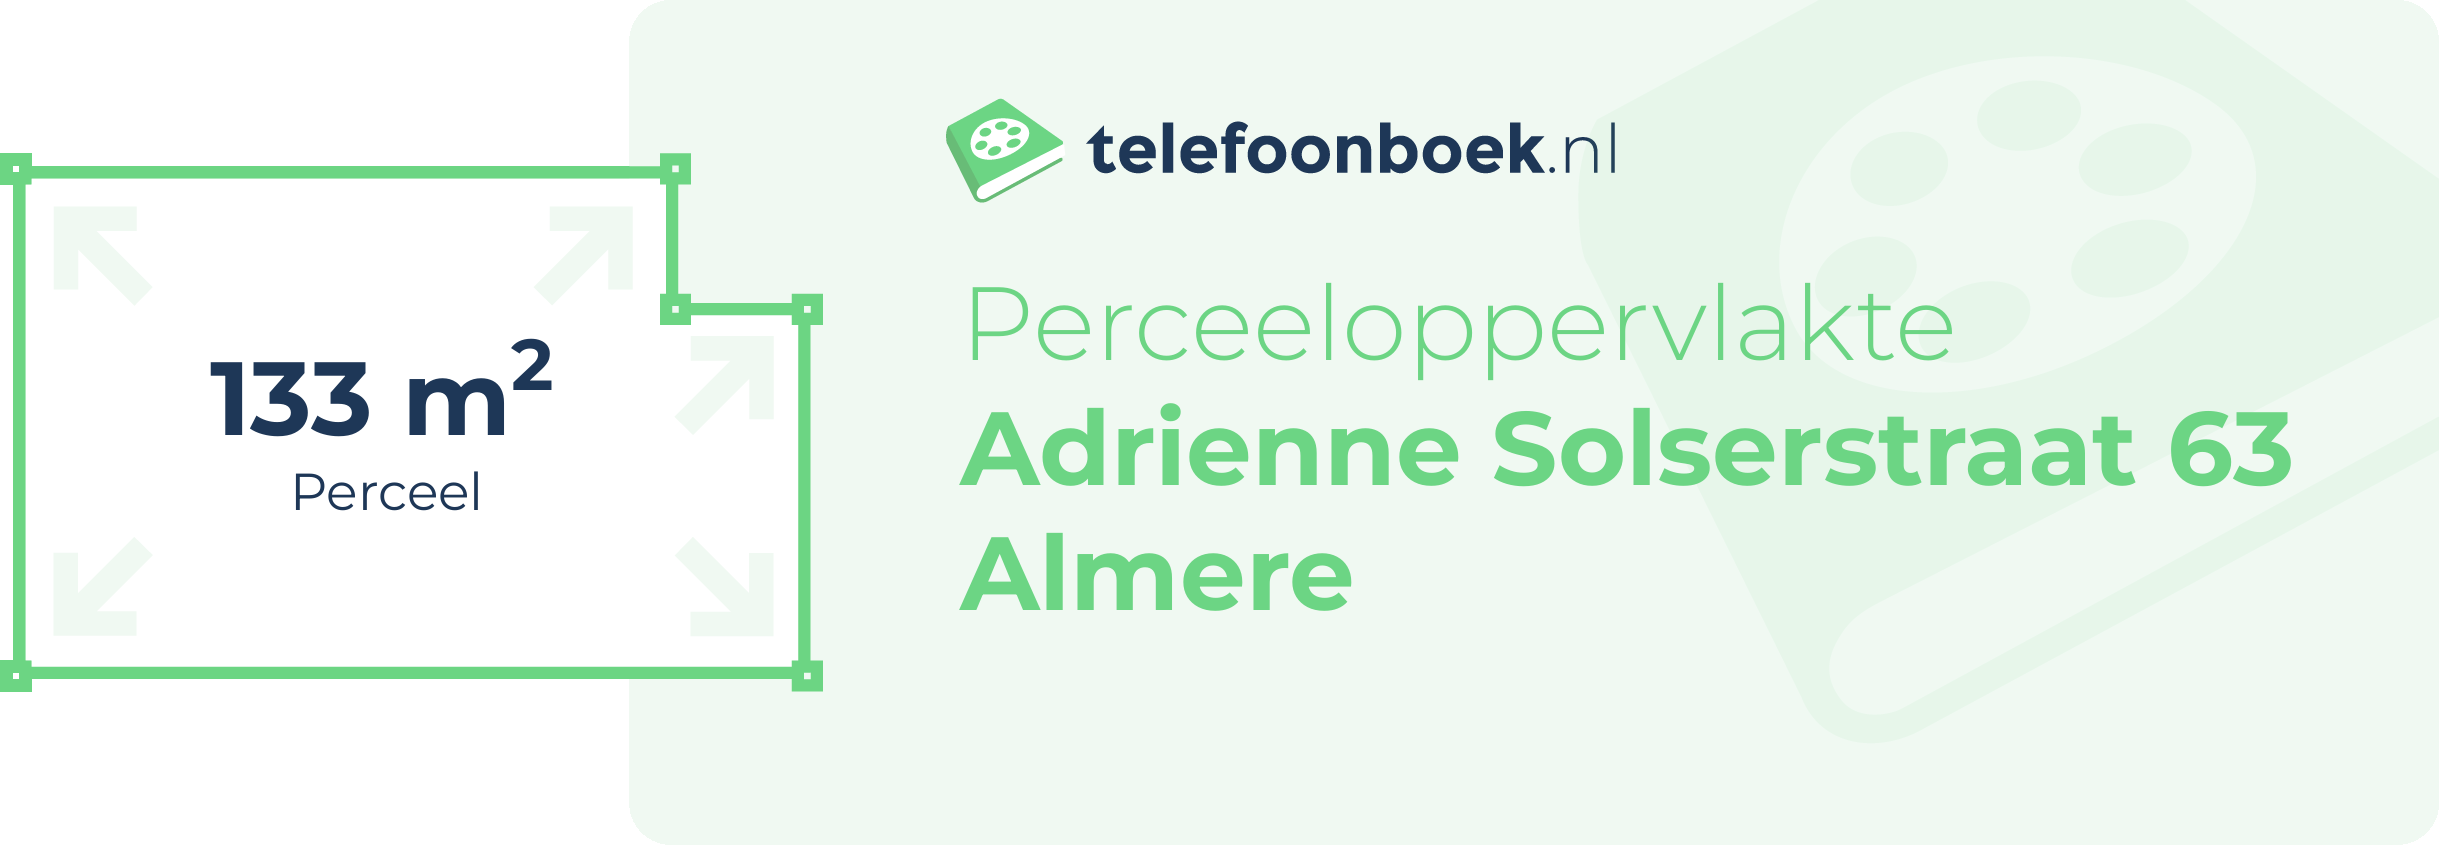 Perceeloppervlakte Adrienne Solserstraat 63 Almere